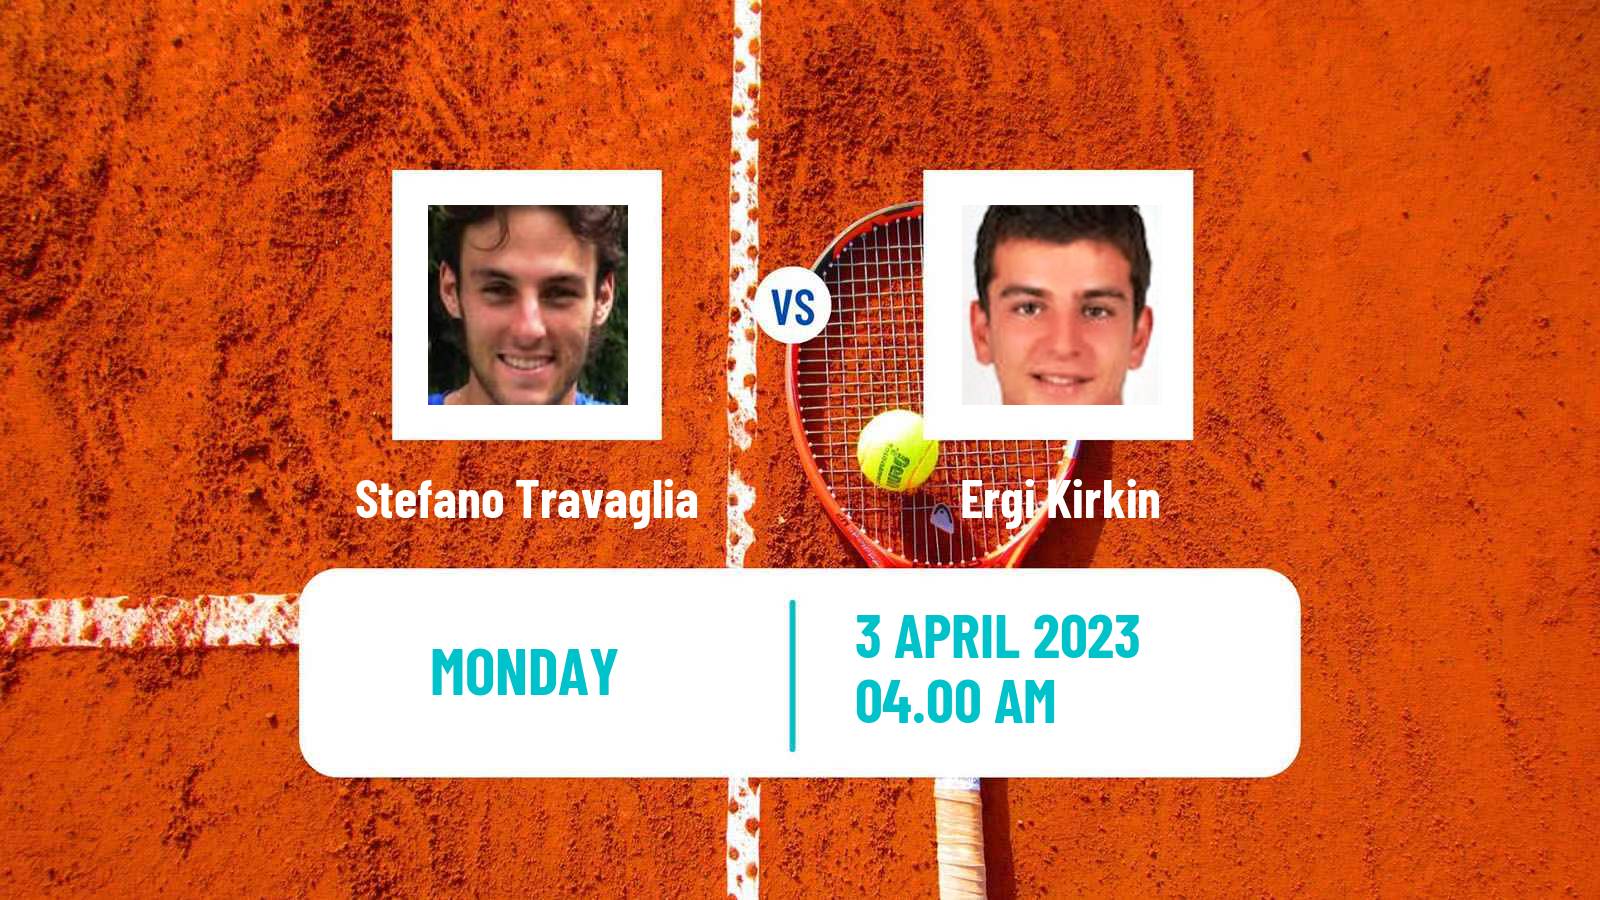 Tennis ATP Challenger Stefano Travaglia - Ergi Kirkin